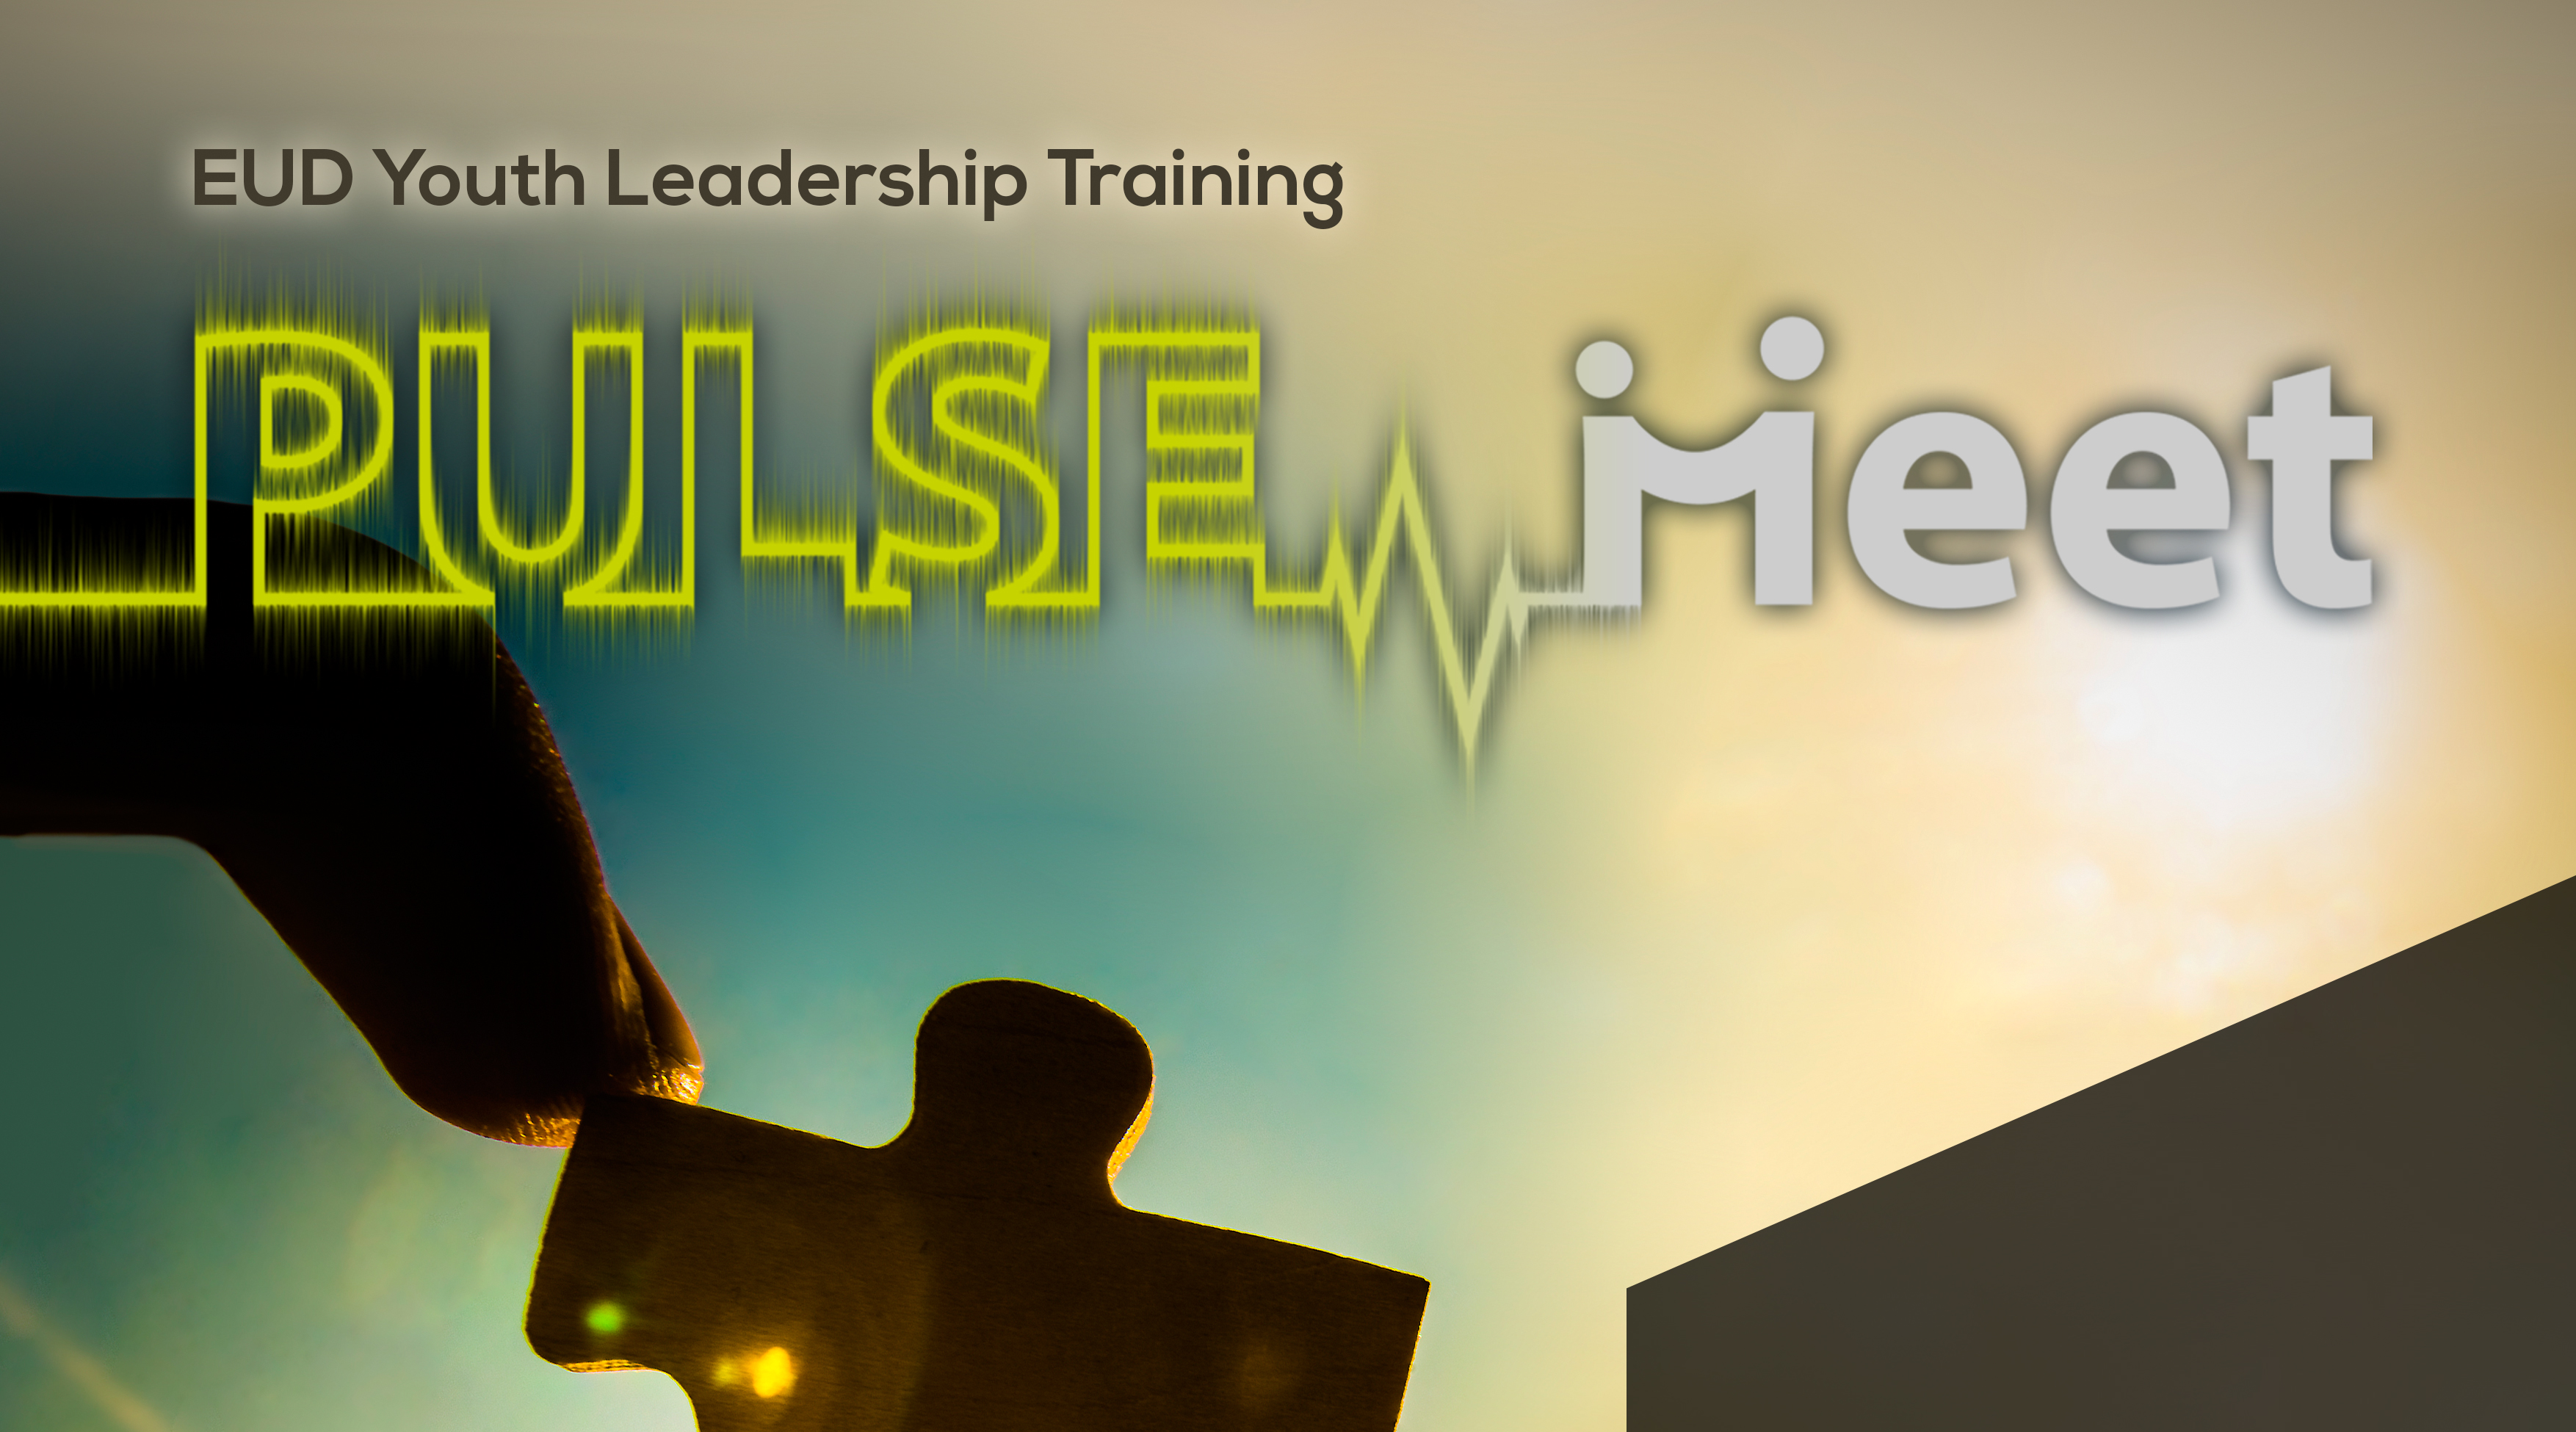 PULSEmeet2019: Sessions & Workshops online!